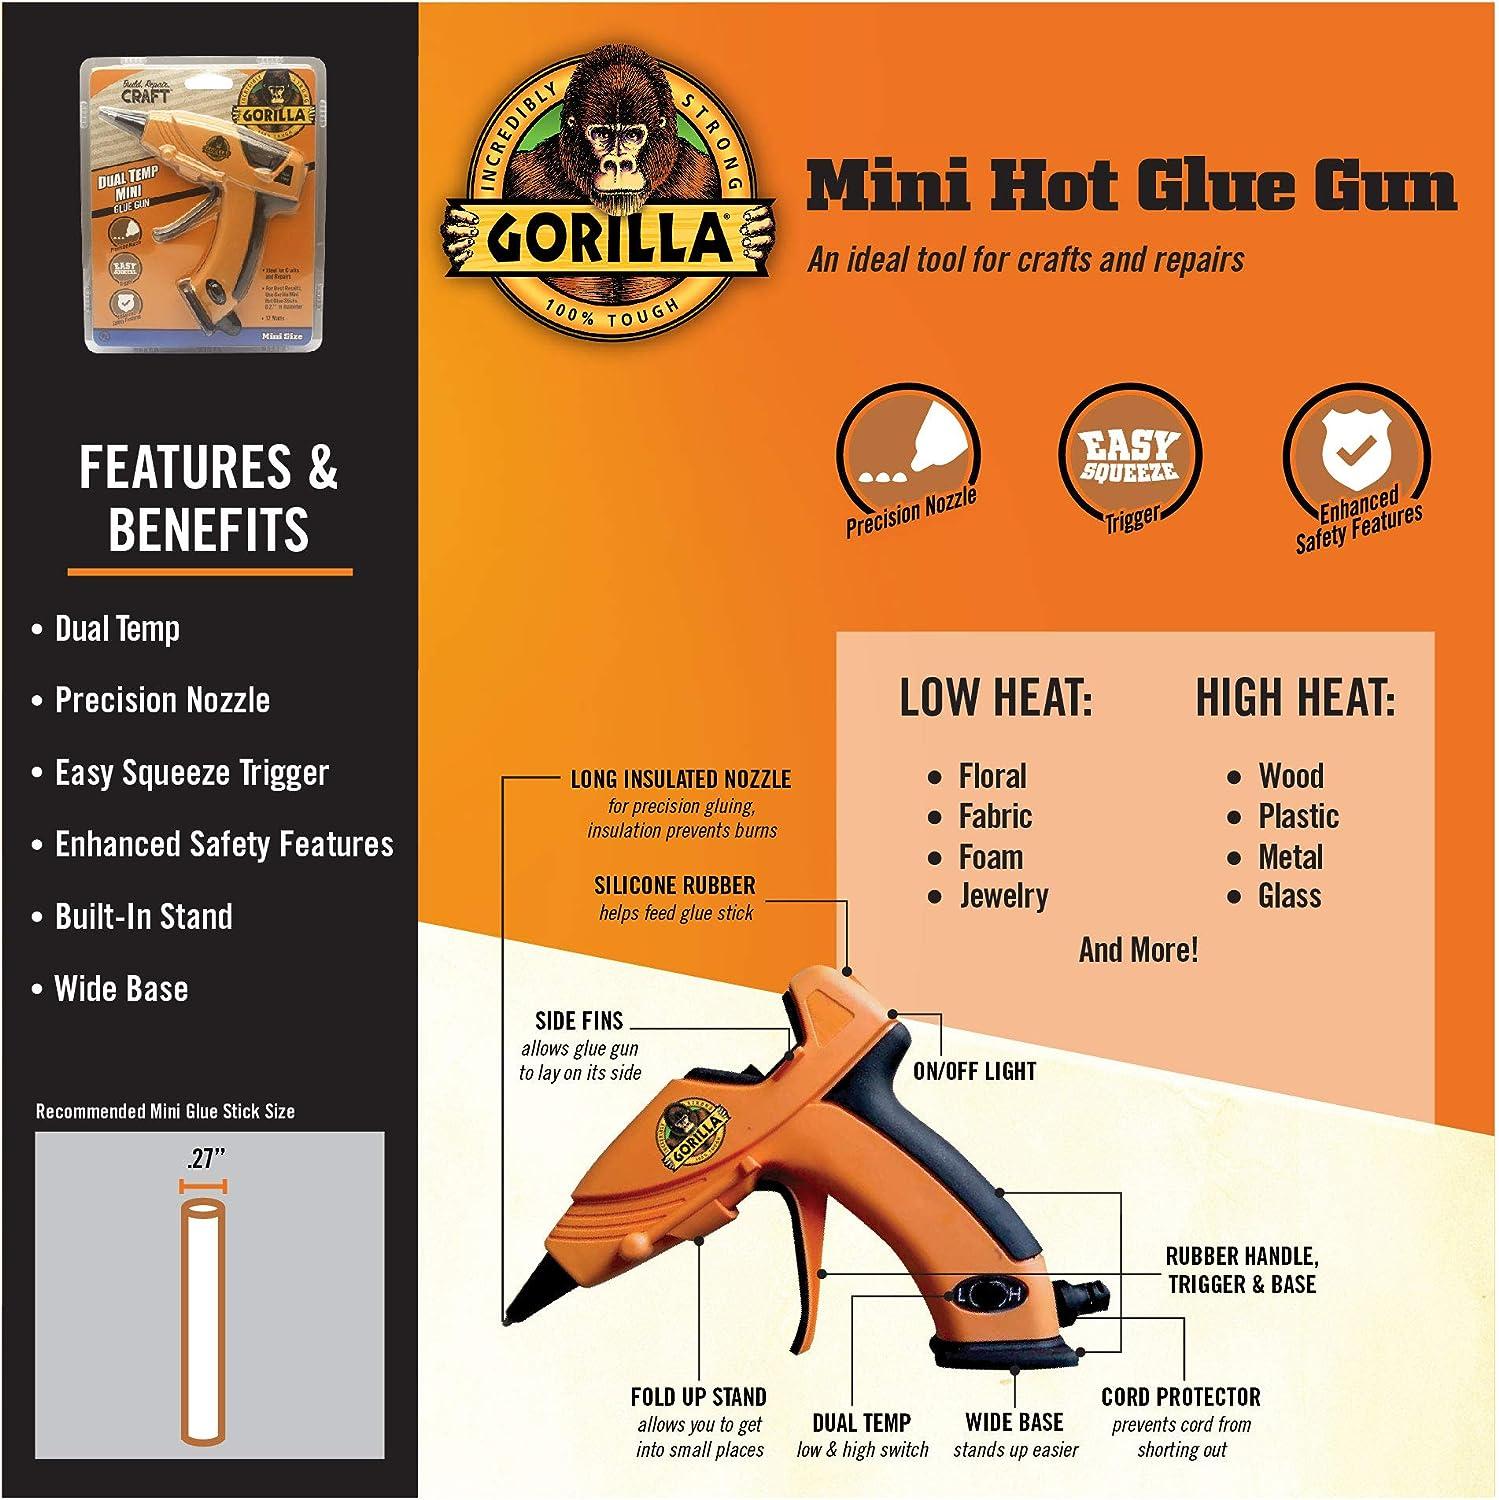 Gorilla Dual Temp Full-Size Hot Glue Gun Kit with 45 45 Sticks, Orange